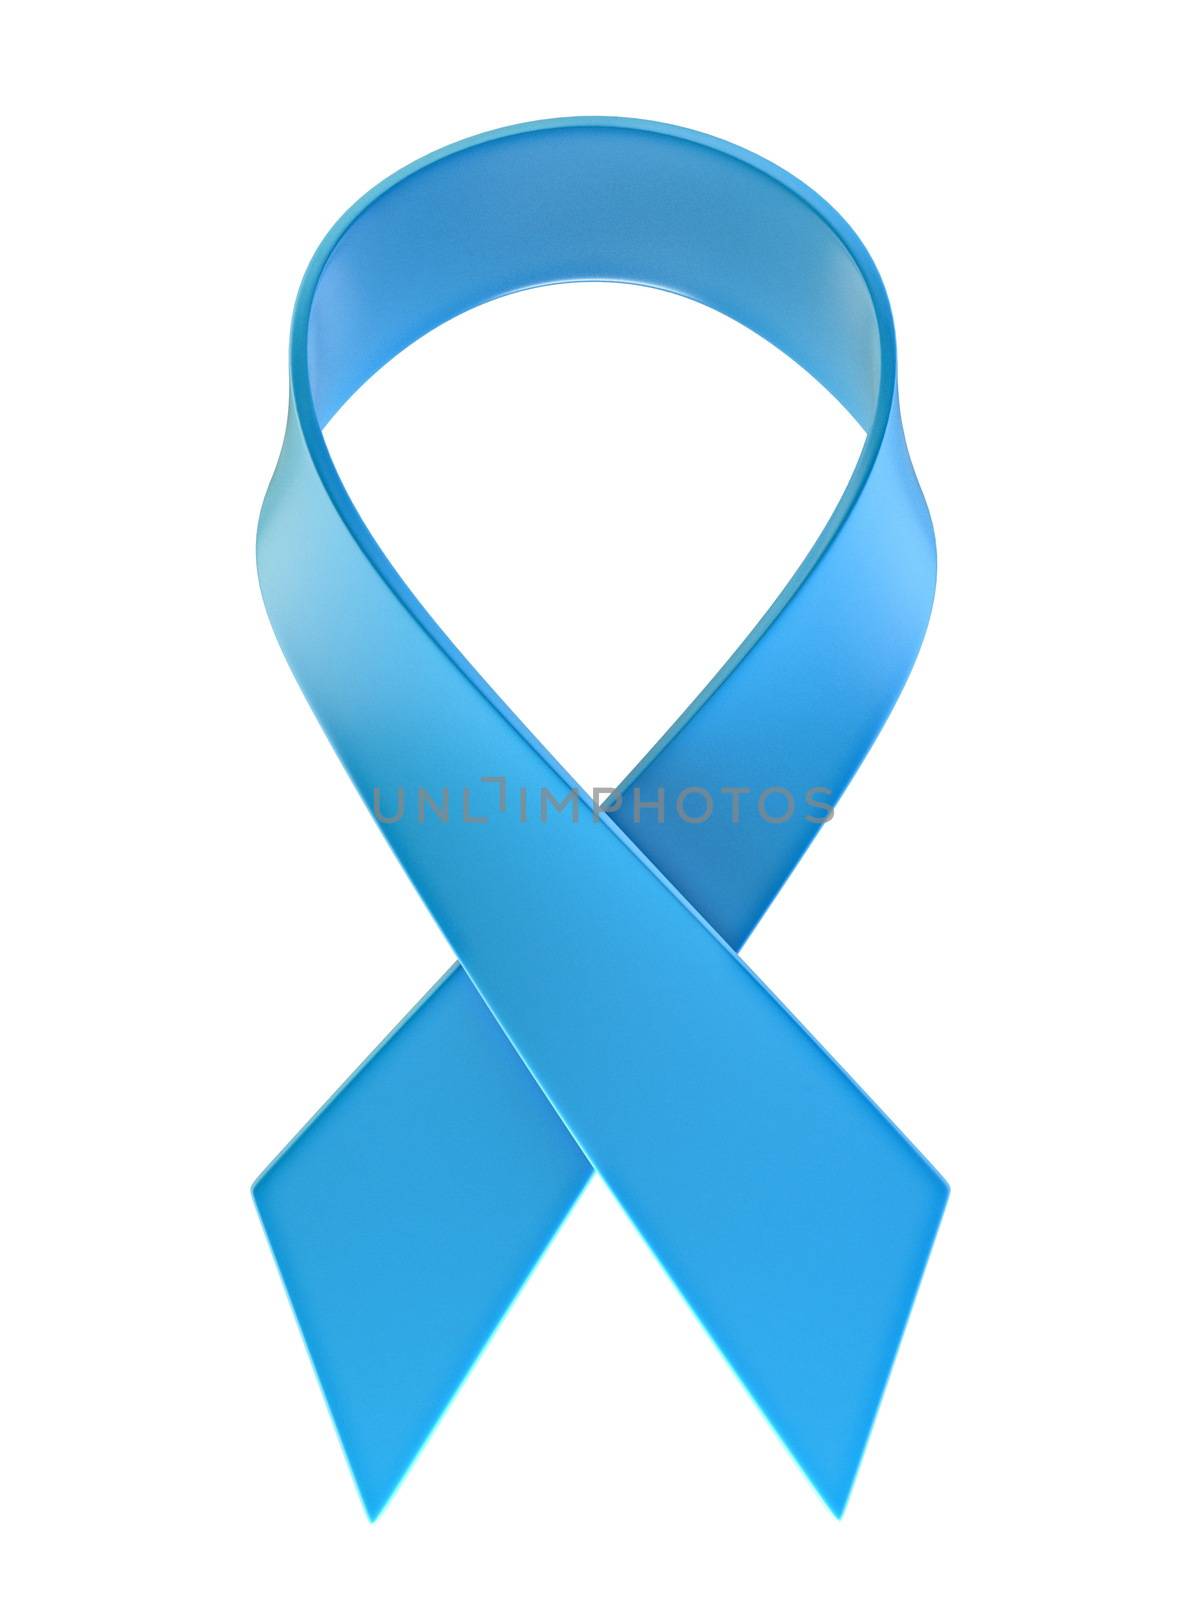 Blue cancer awareness ribbon 3D render illustration isolated on white background